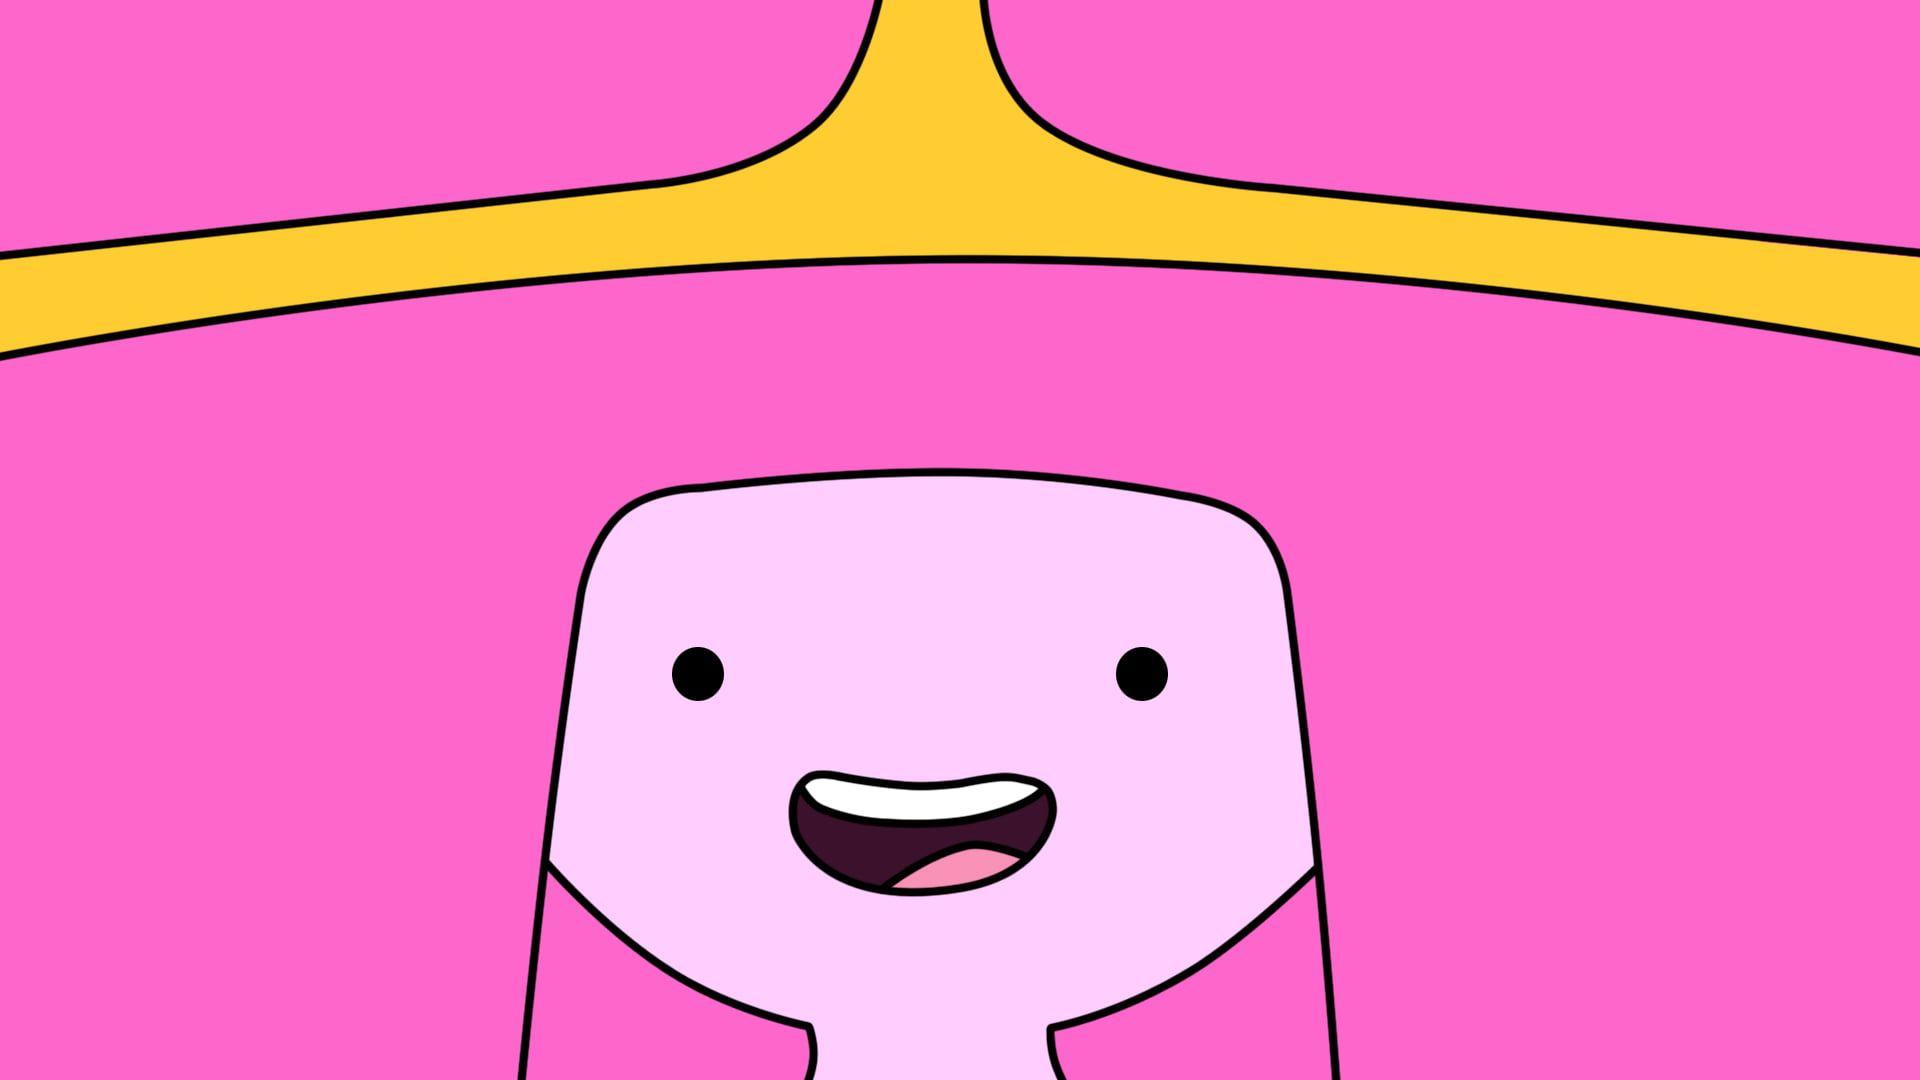 Princess Bubblegum Wallpapers - Top Free Princess Bubblegum Backgrounds ...